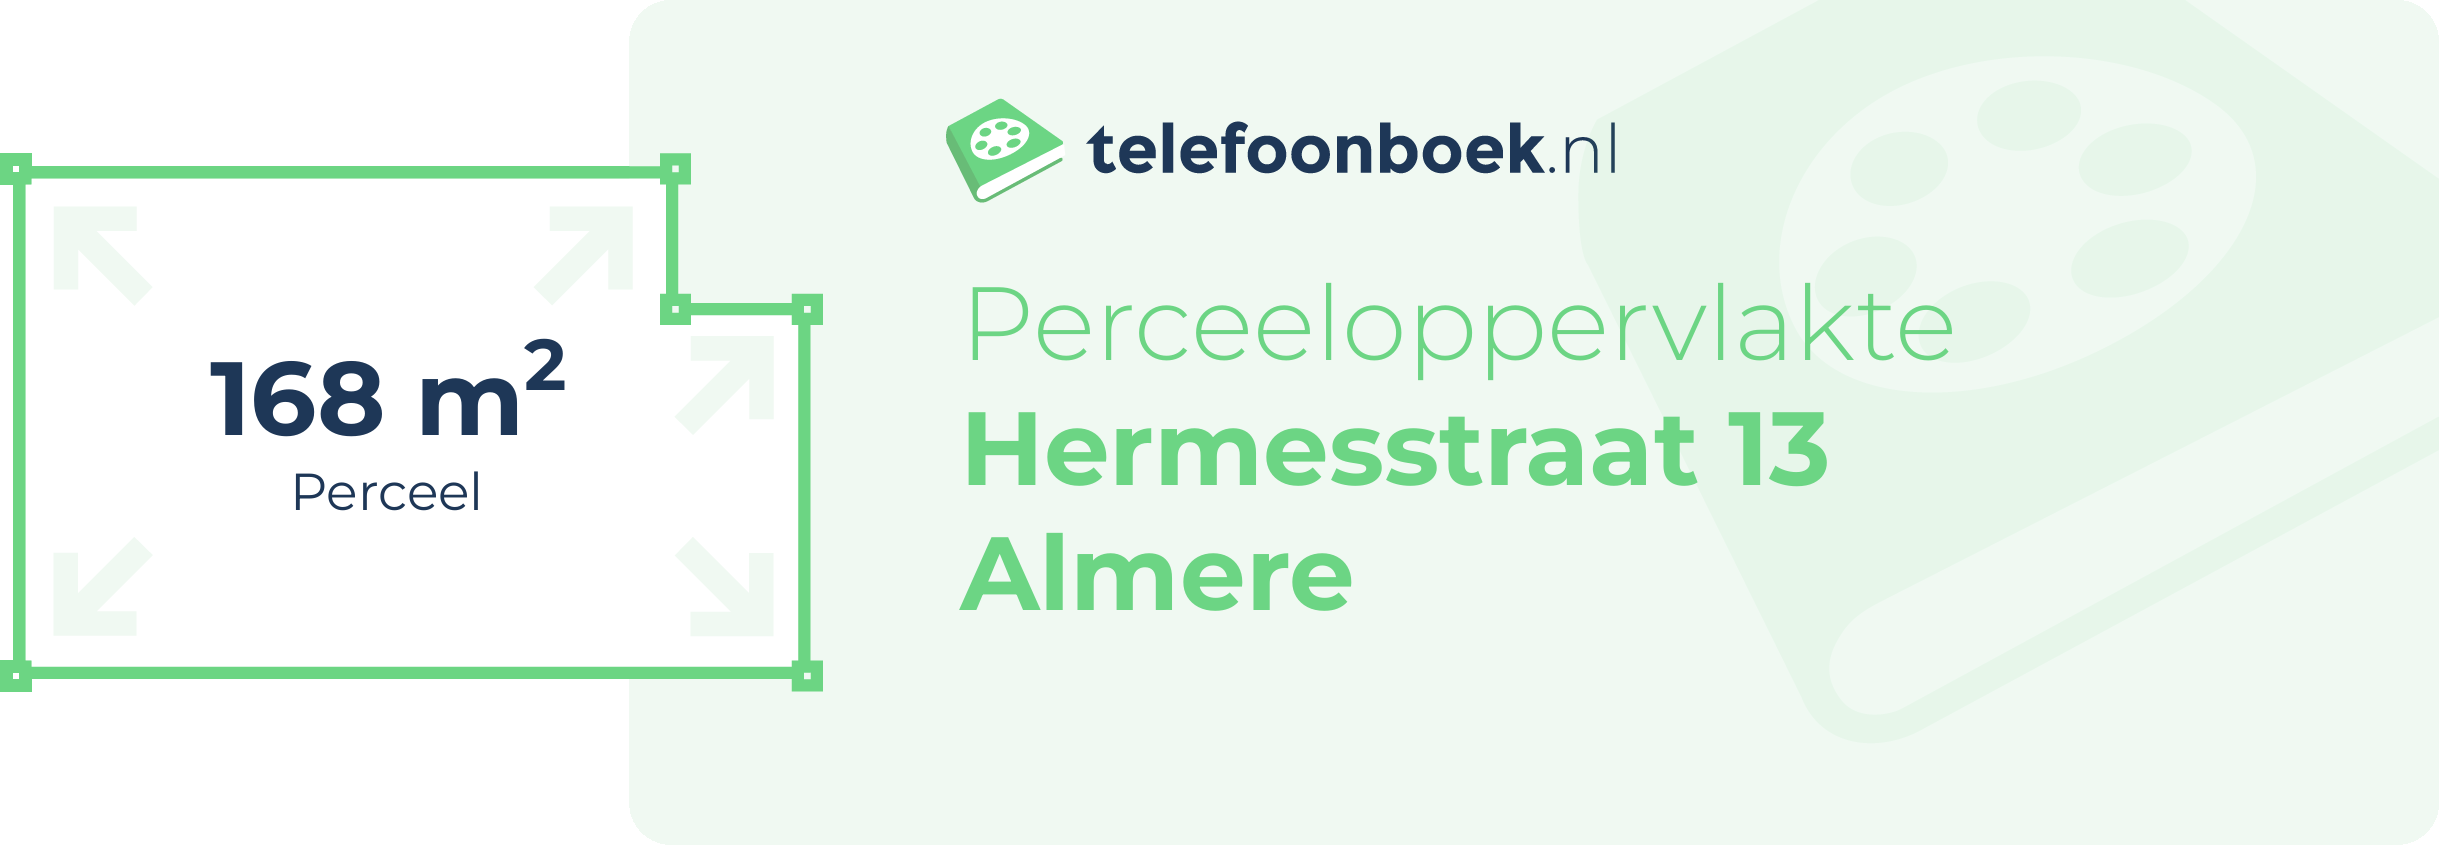 Perceeloppervlakte Hermesstraat 13 Almere